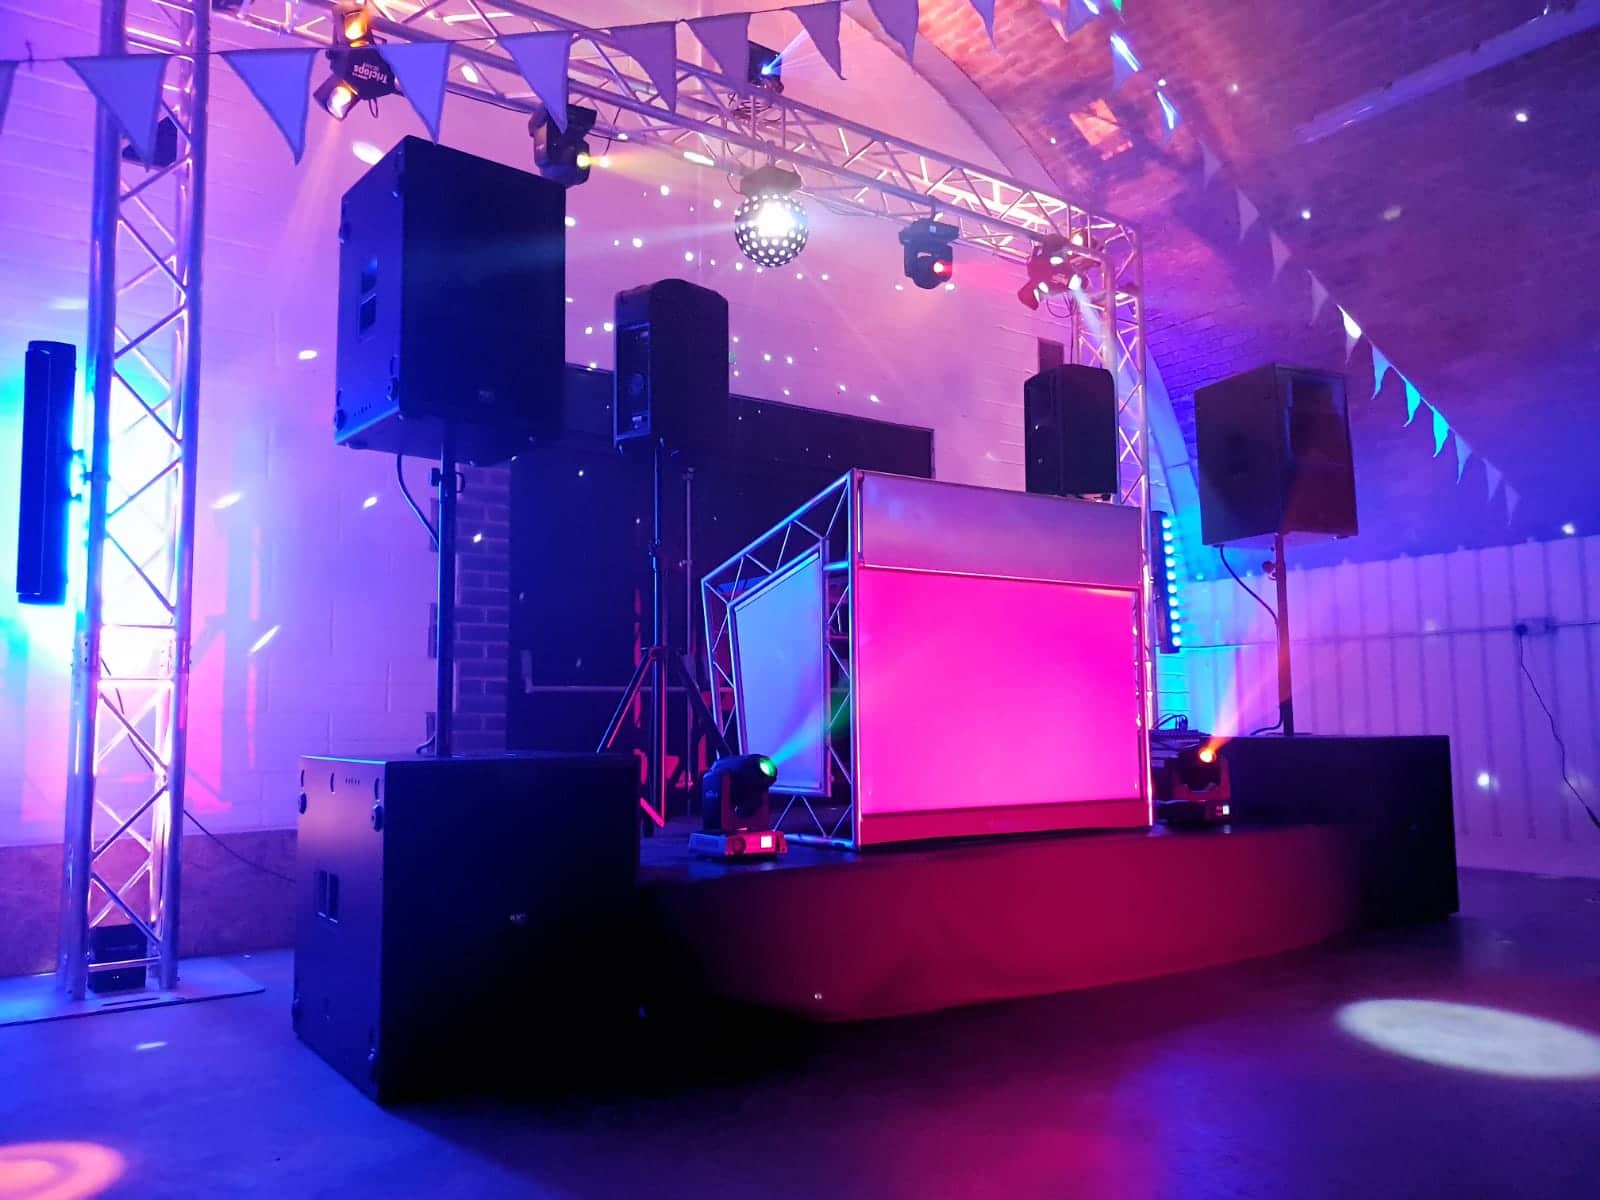 DJ Equipment, Stage, Speakers and Lighting